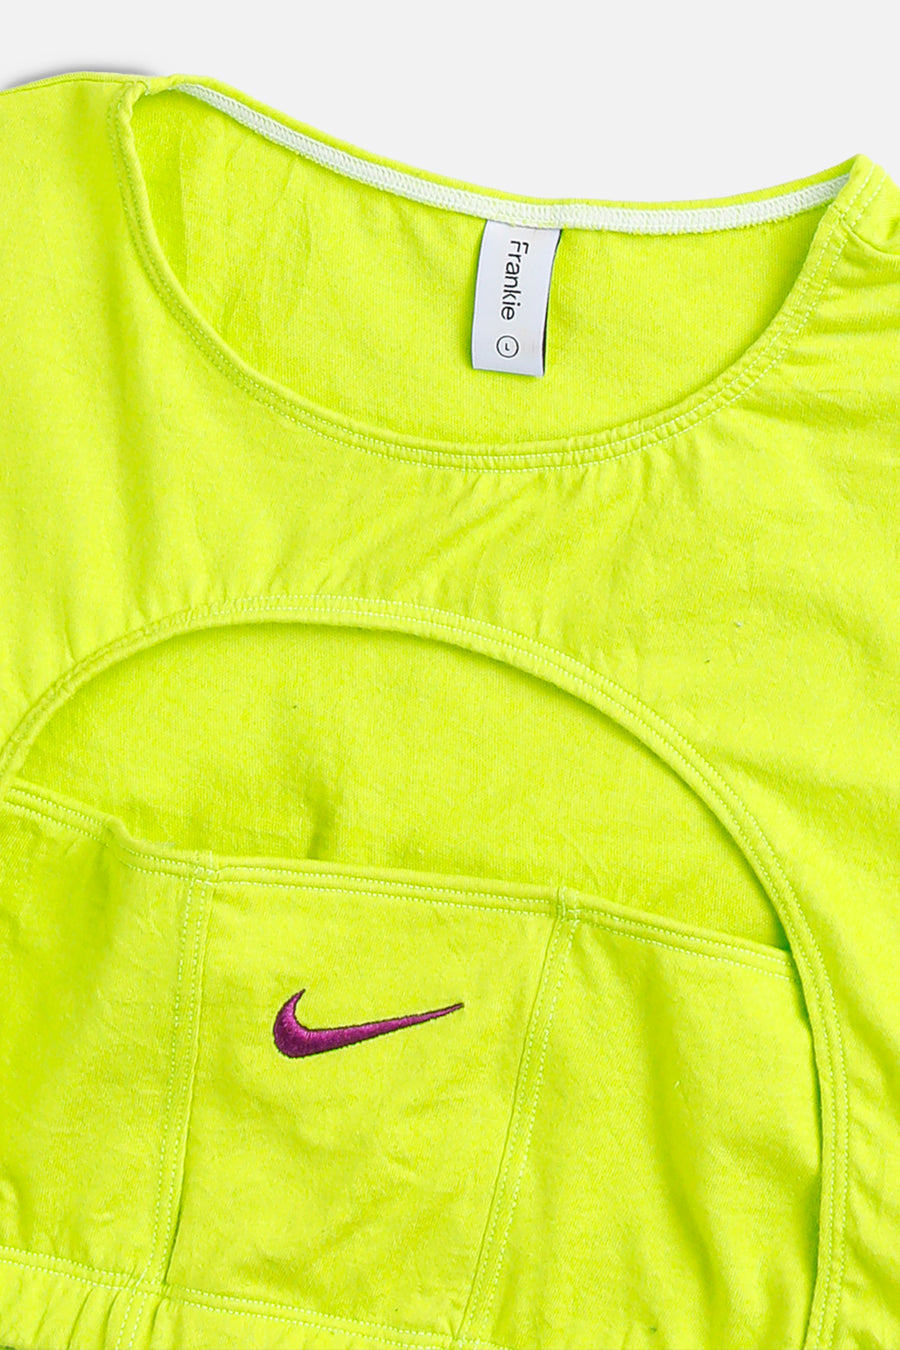 Rework Nike Cut Out Tee - L